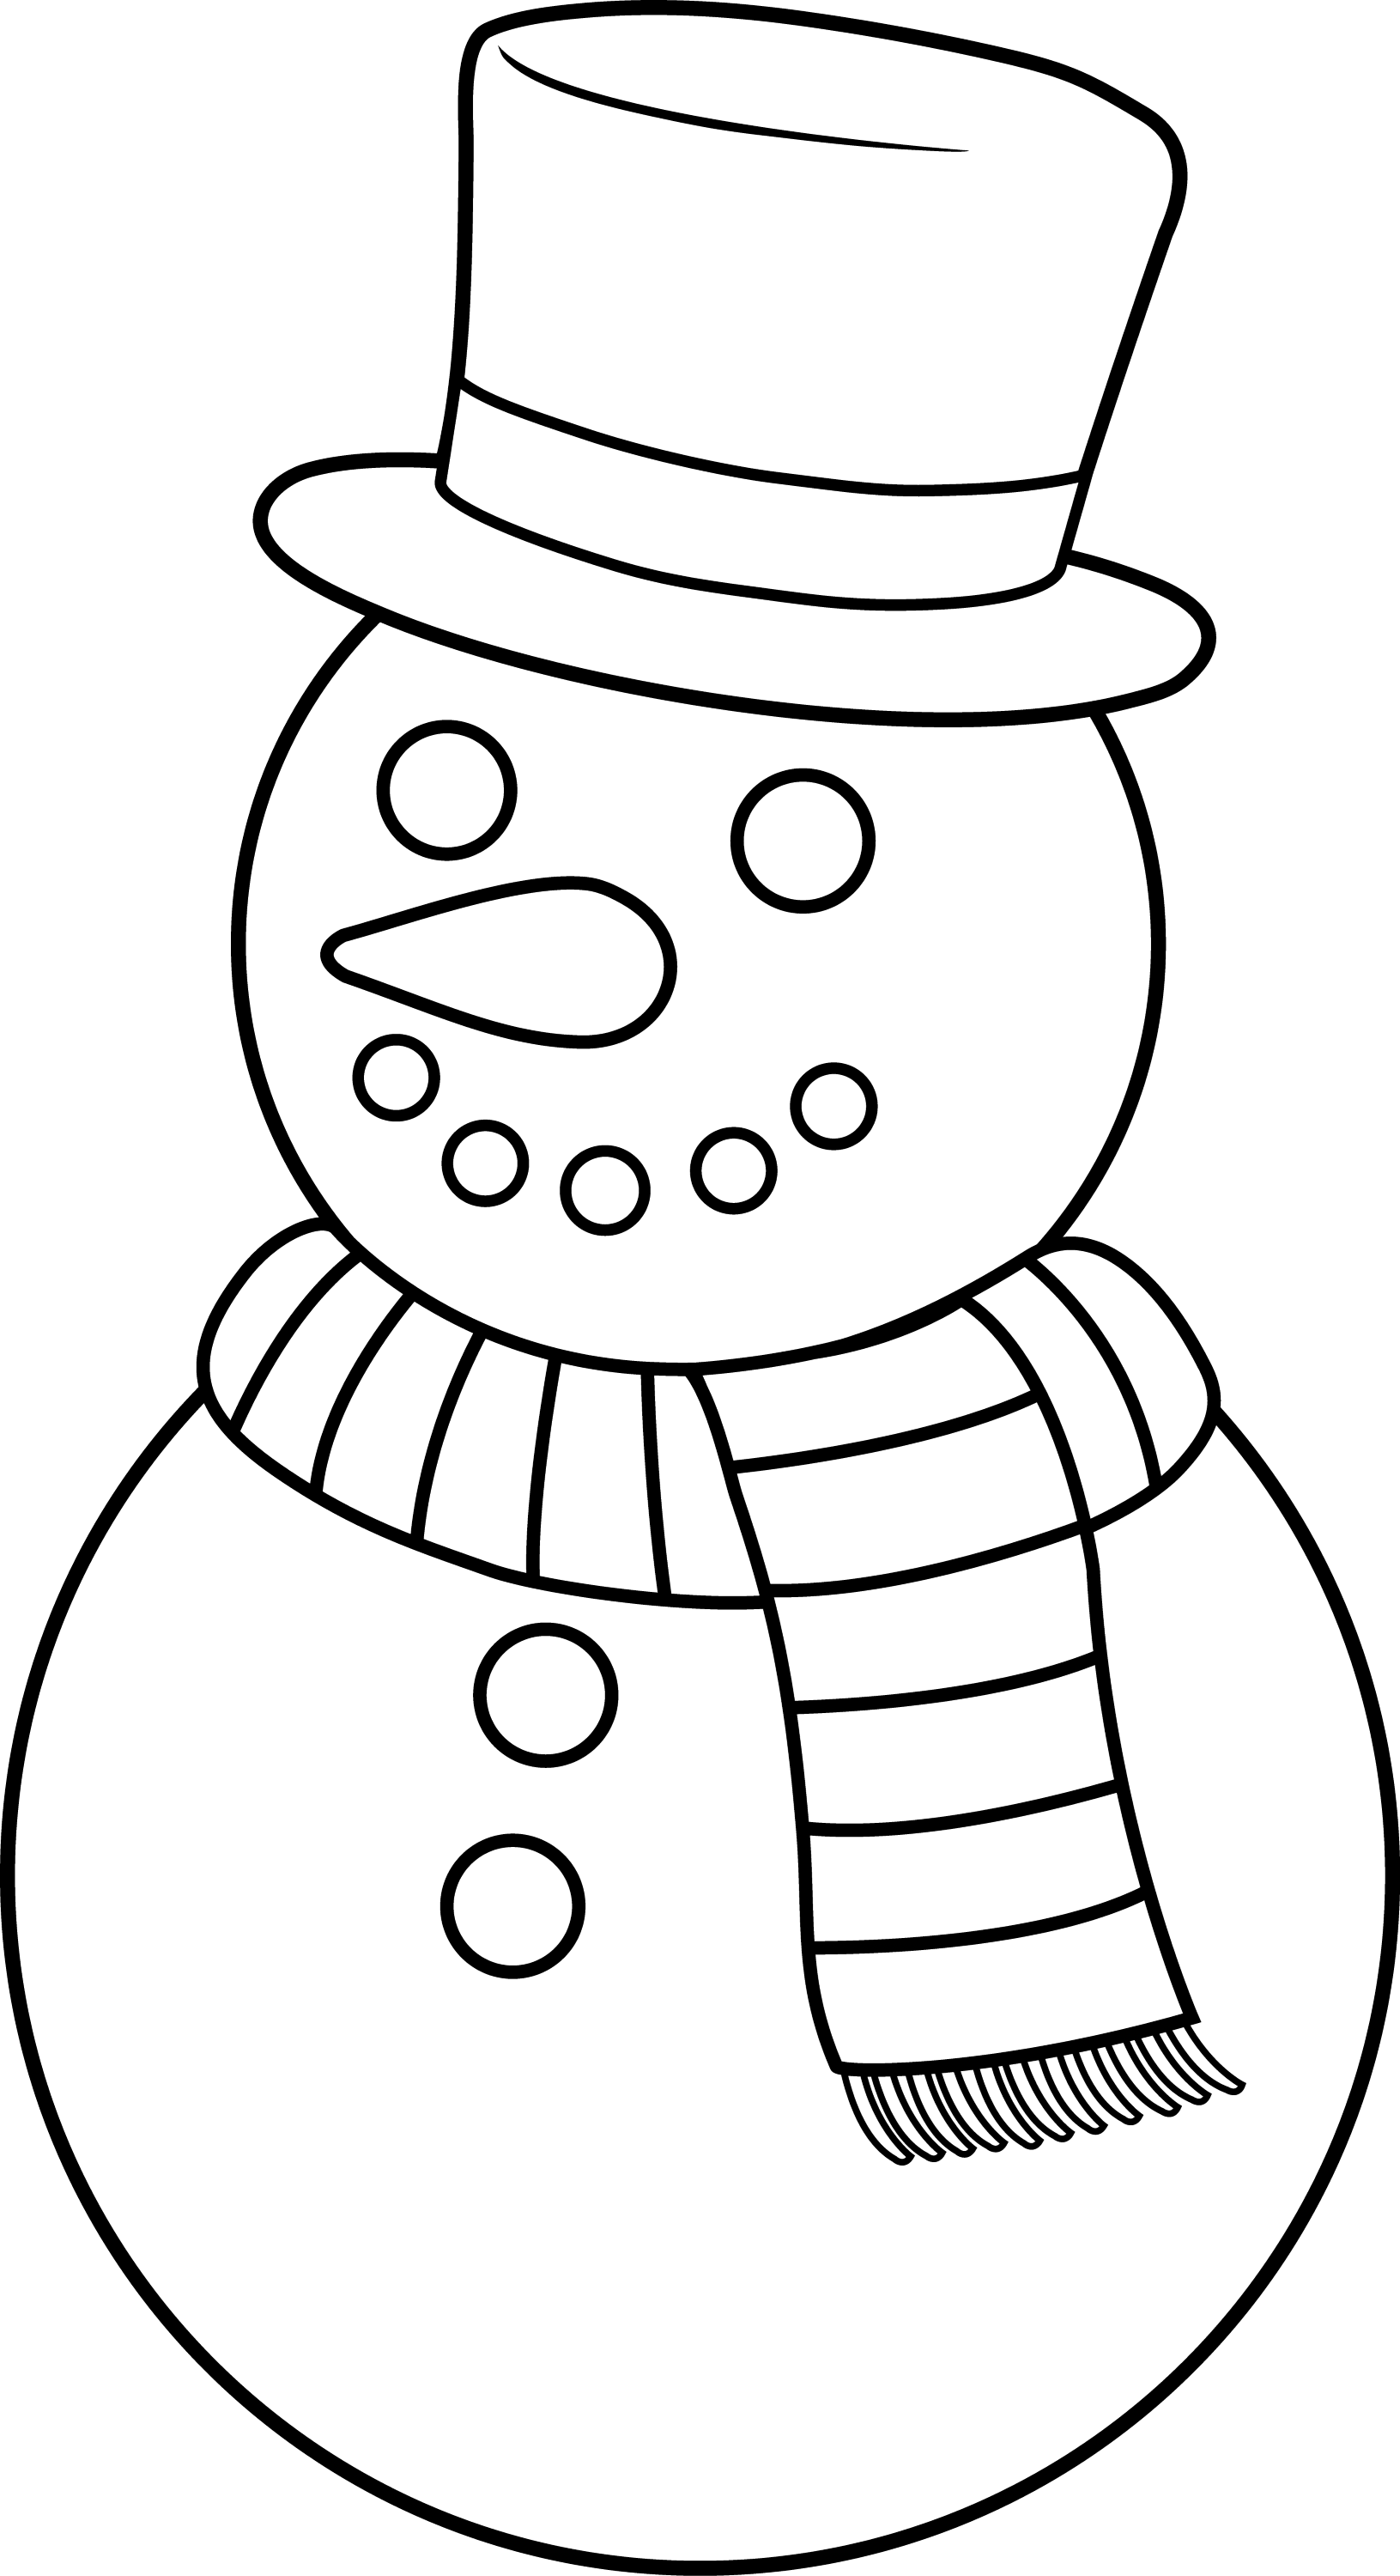 snowman clipart free black and white - photo #12